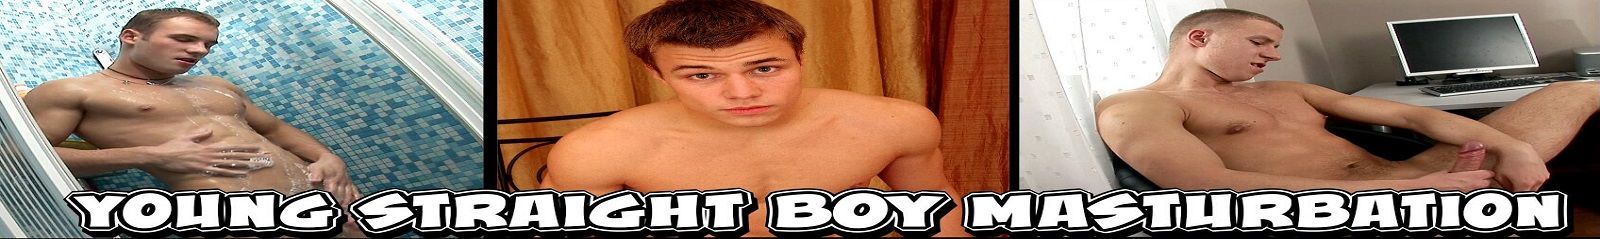 Young straight boy masturbation